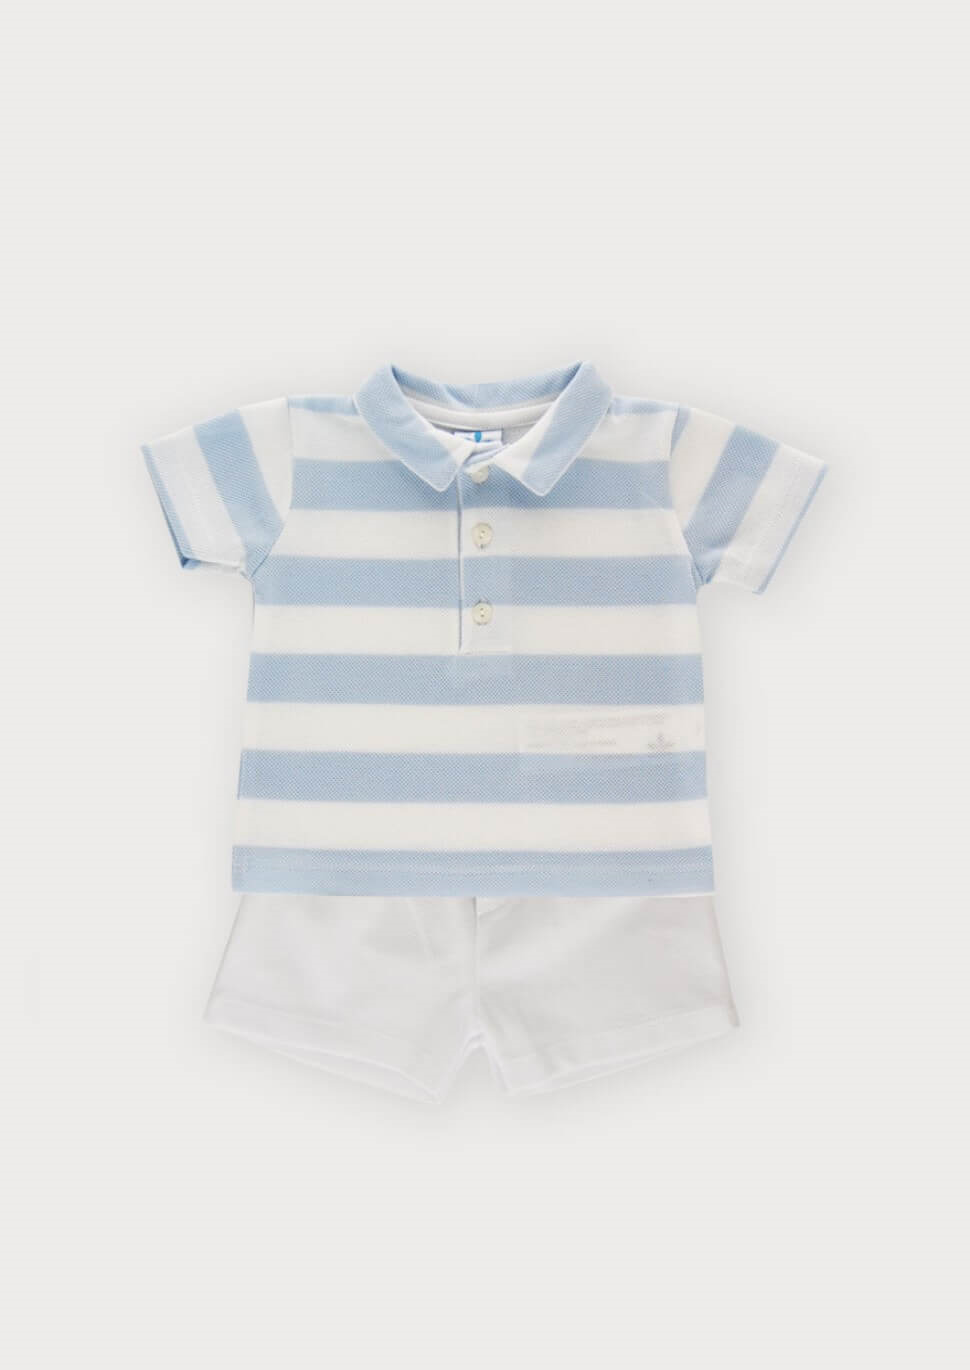 sky striped T-Shirt & Shorts Set by sardon from tors childrens wear